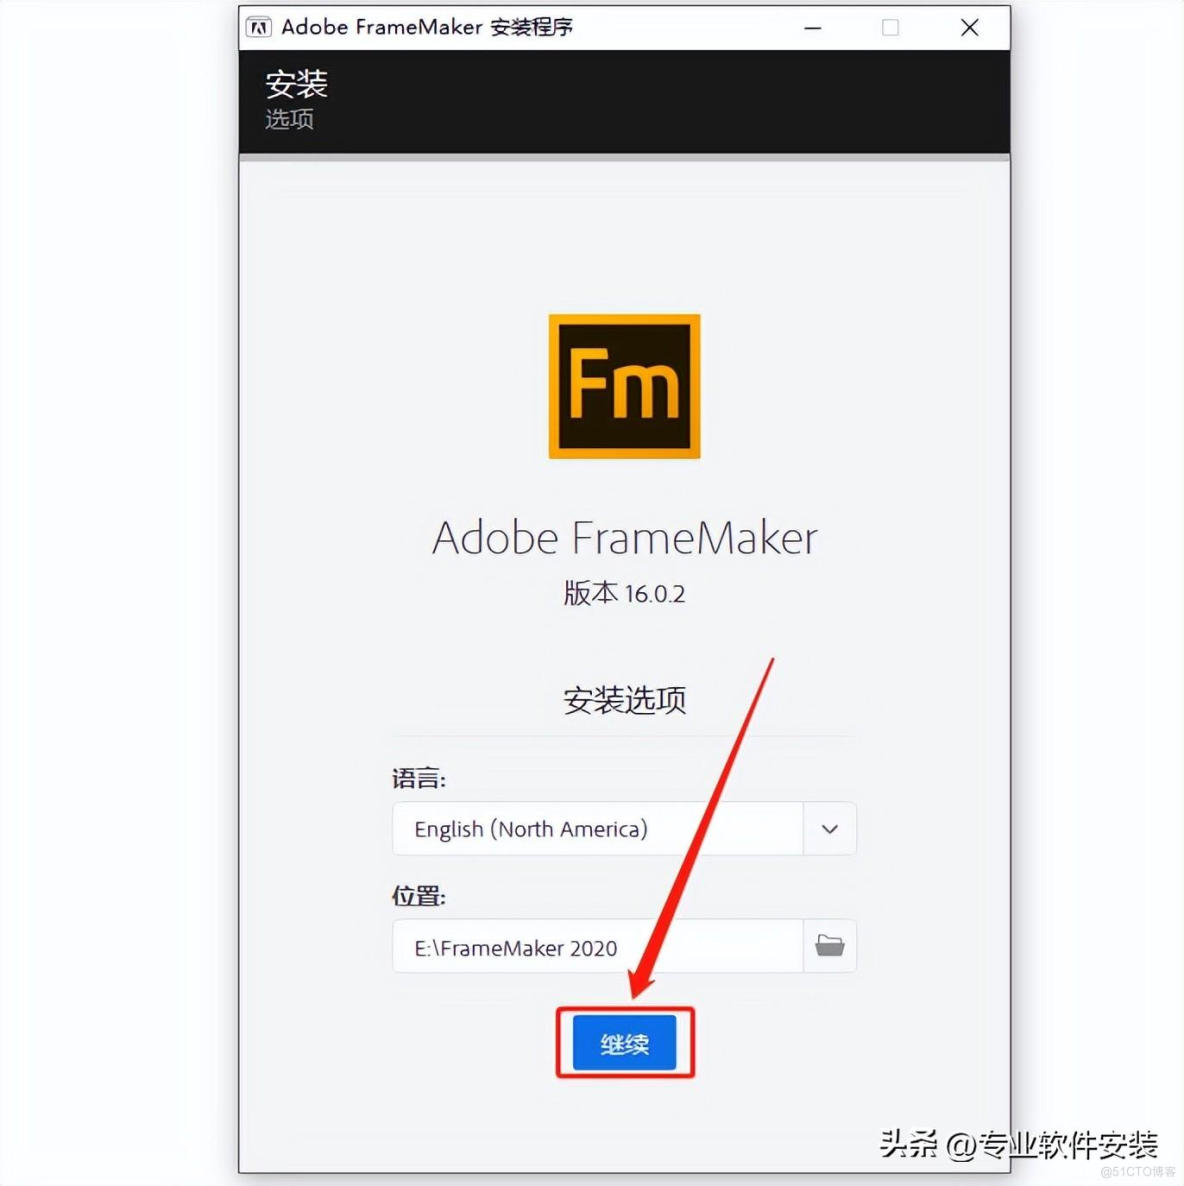 Adobe FrameMaker（Fm）2020软件安装包和安装教程_Adobe FrameMaker2020_08